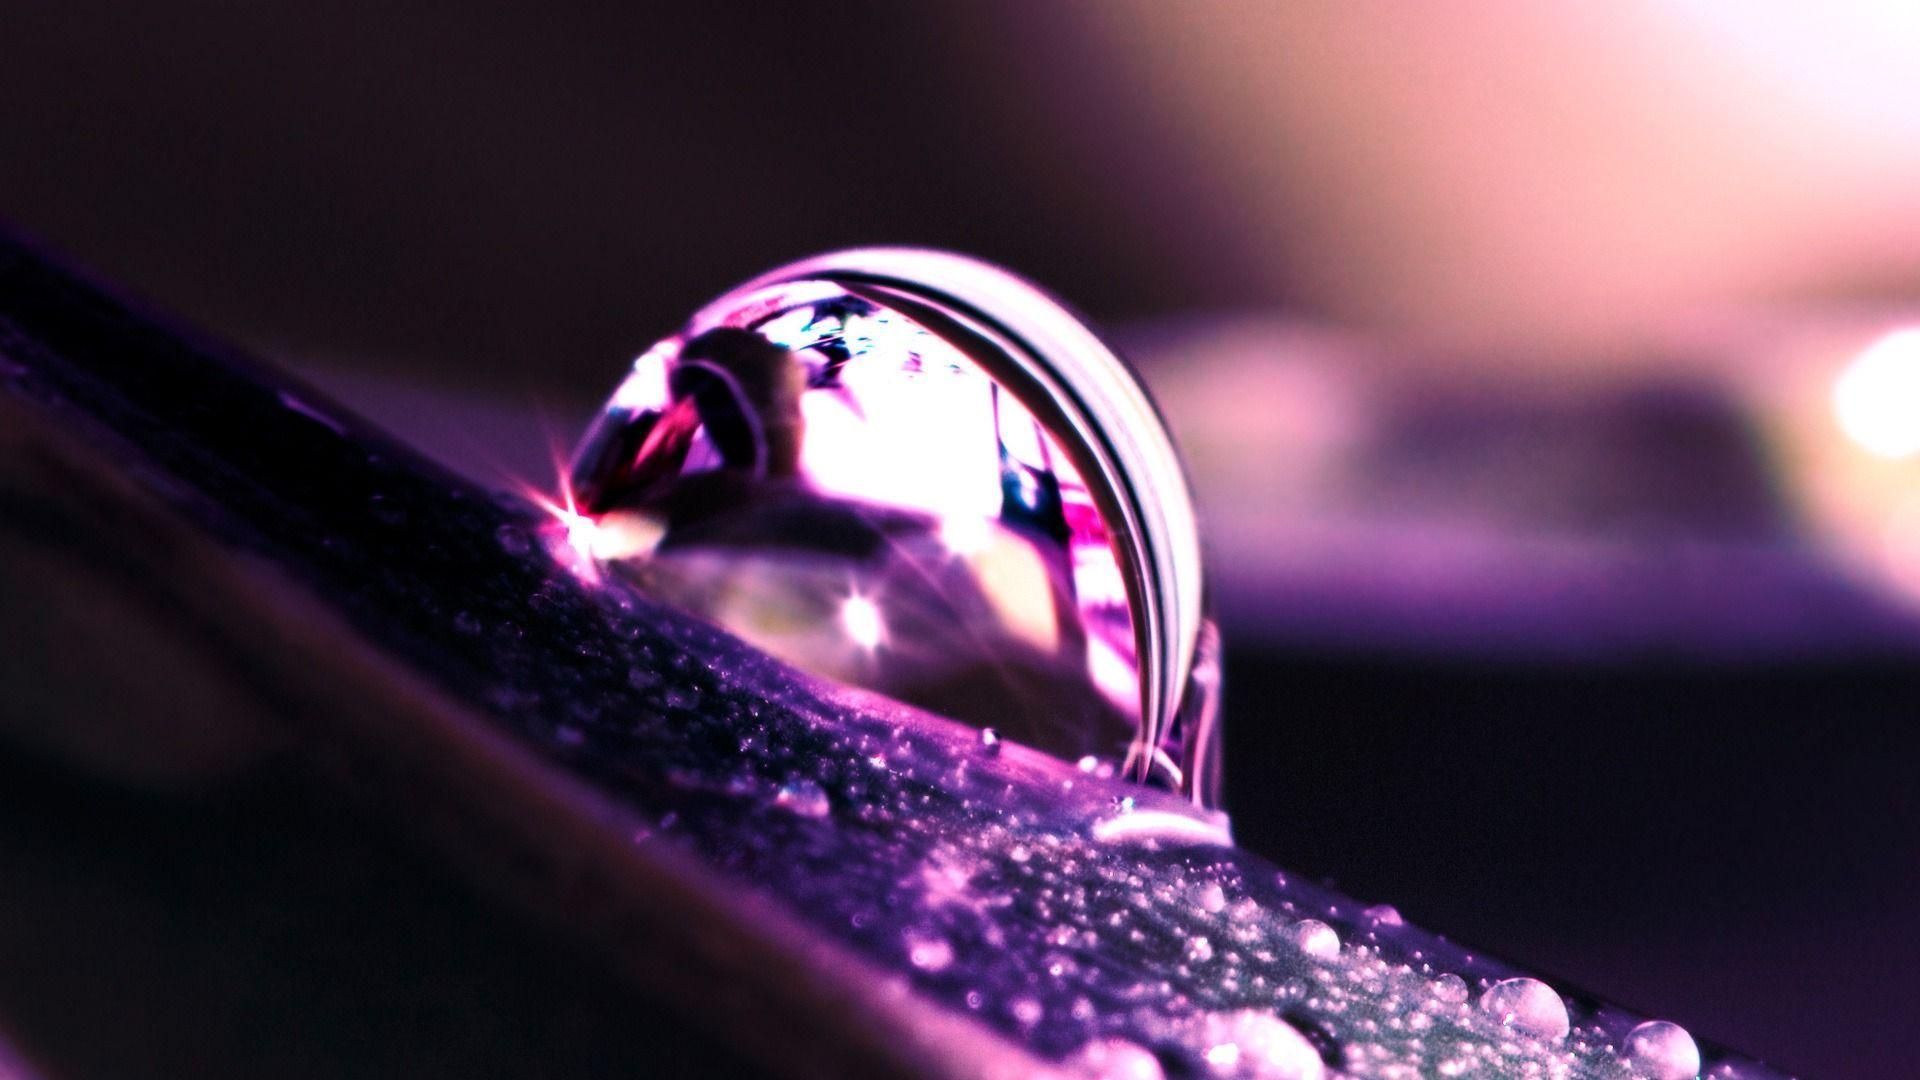 Purple Water Drops. image description for purple water drop